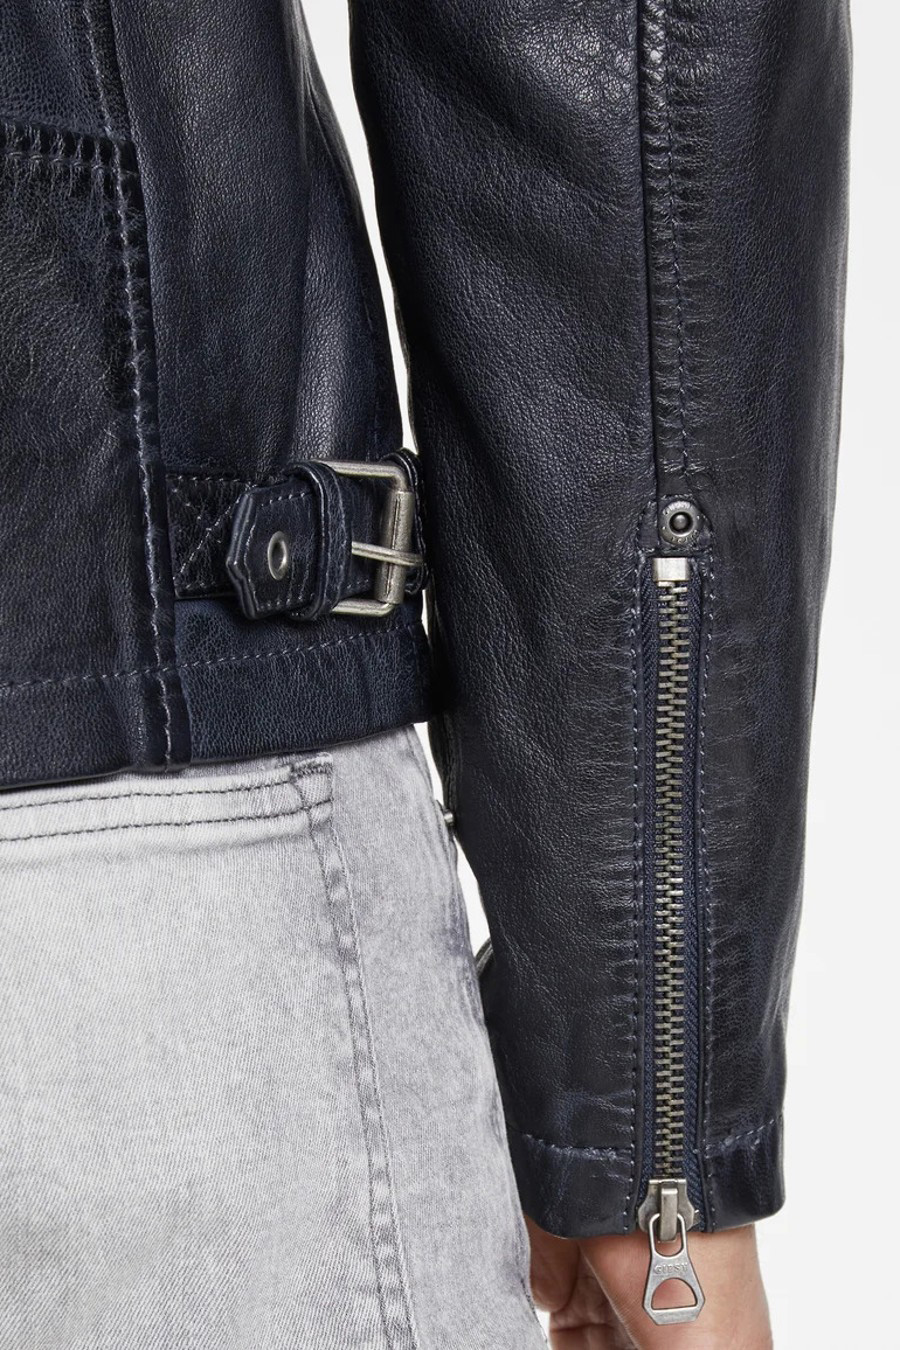 Leather jacket GIPSY Marc-LAKEV-BIO-NAVY-BLAC